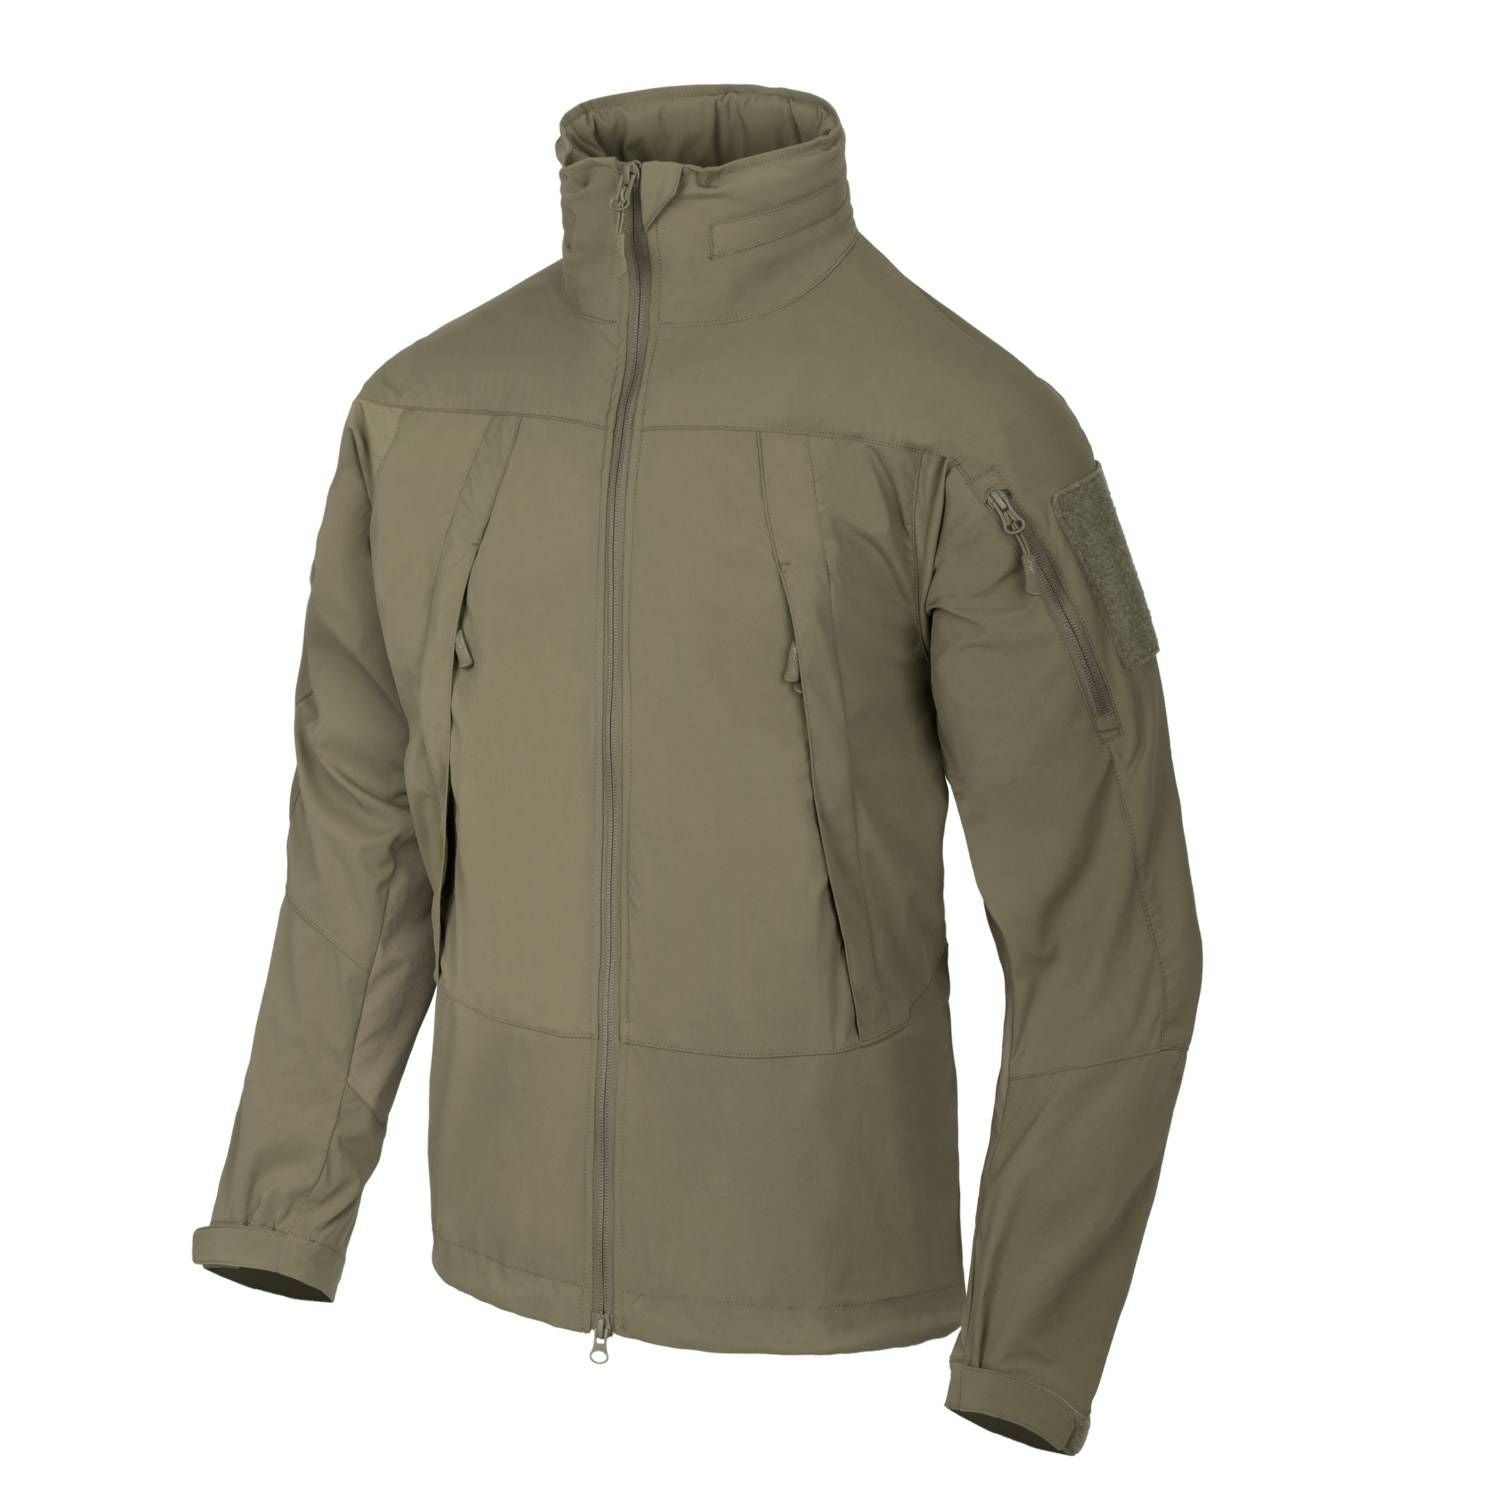 Outdoor Jackets, Waterproof, Military Coats & Jackets – The Back 